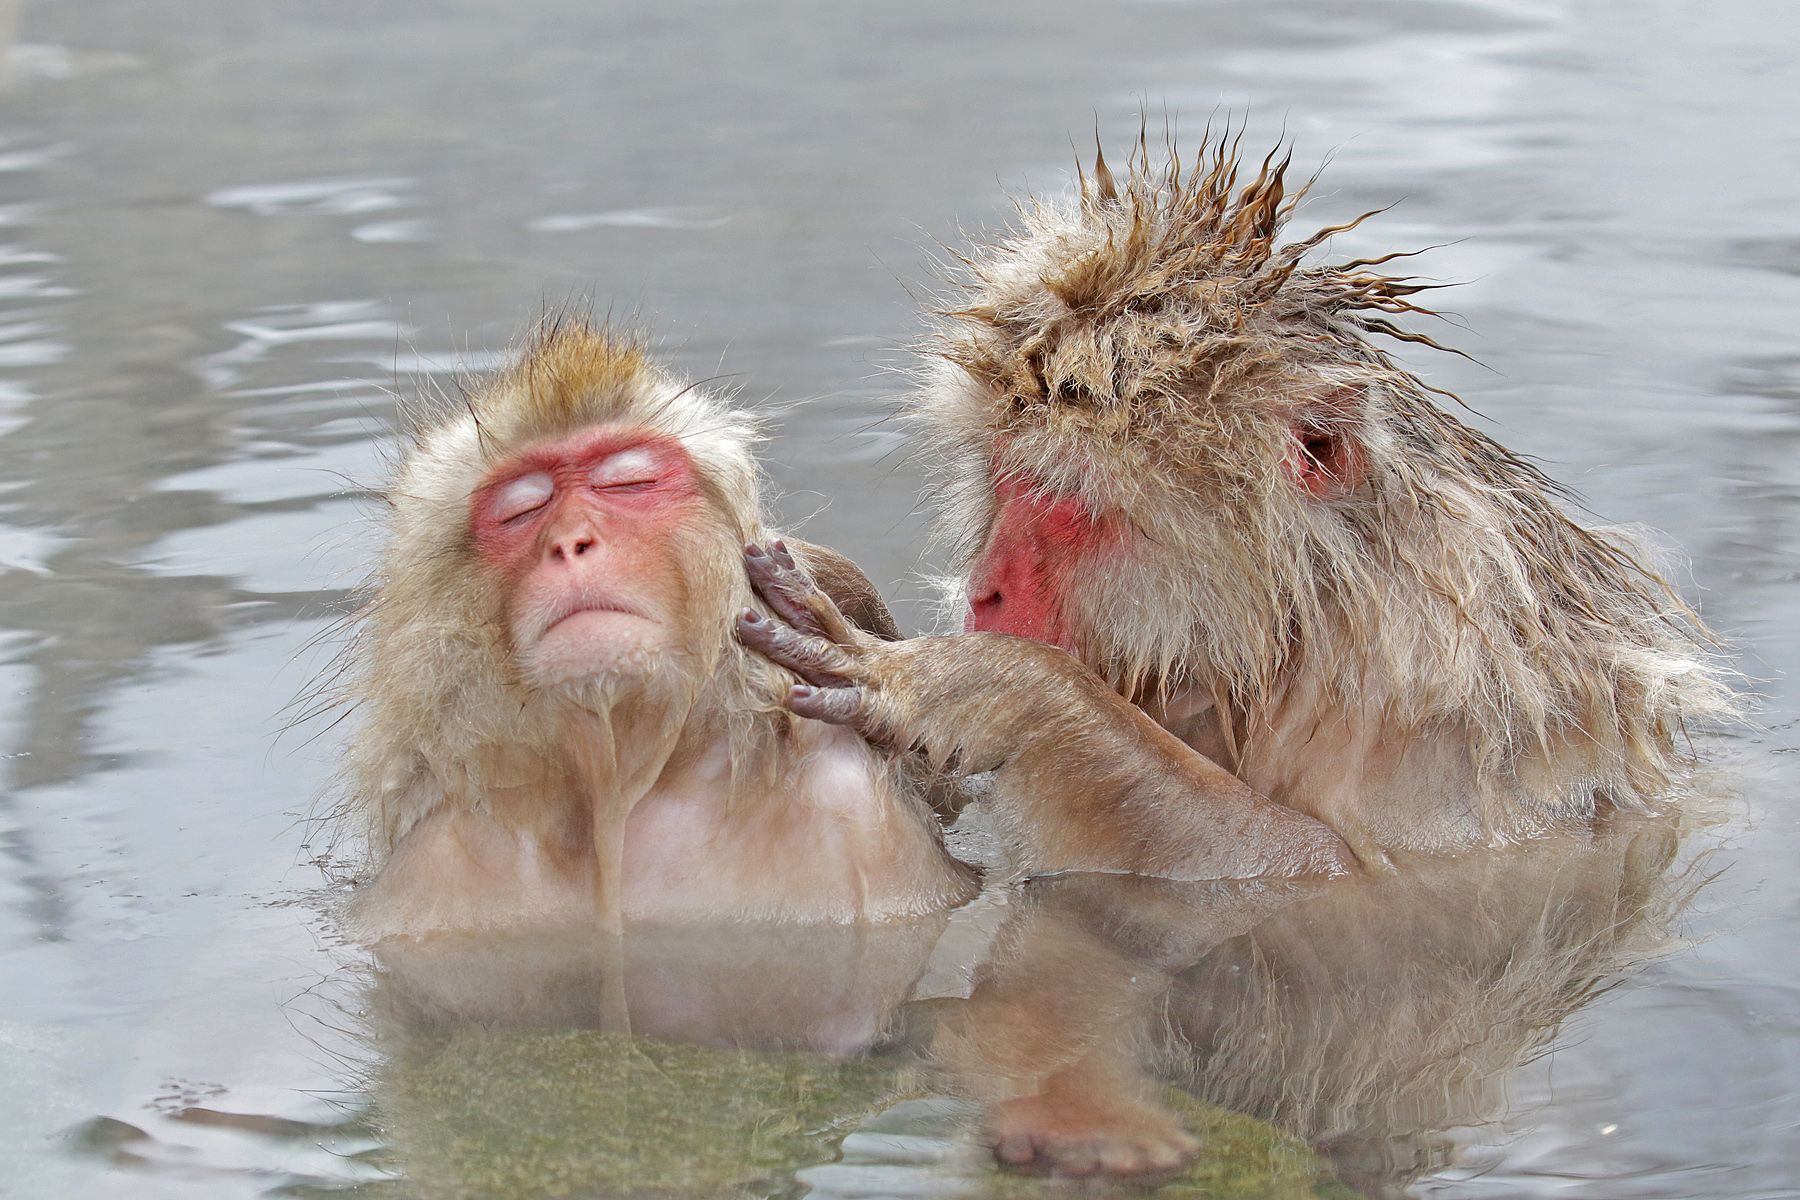 Japanese Macaques (Snow Monkeys) engaged in mutual grooming in Honshu, Japan